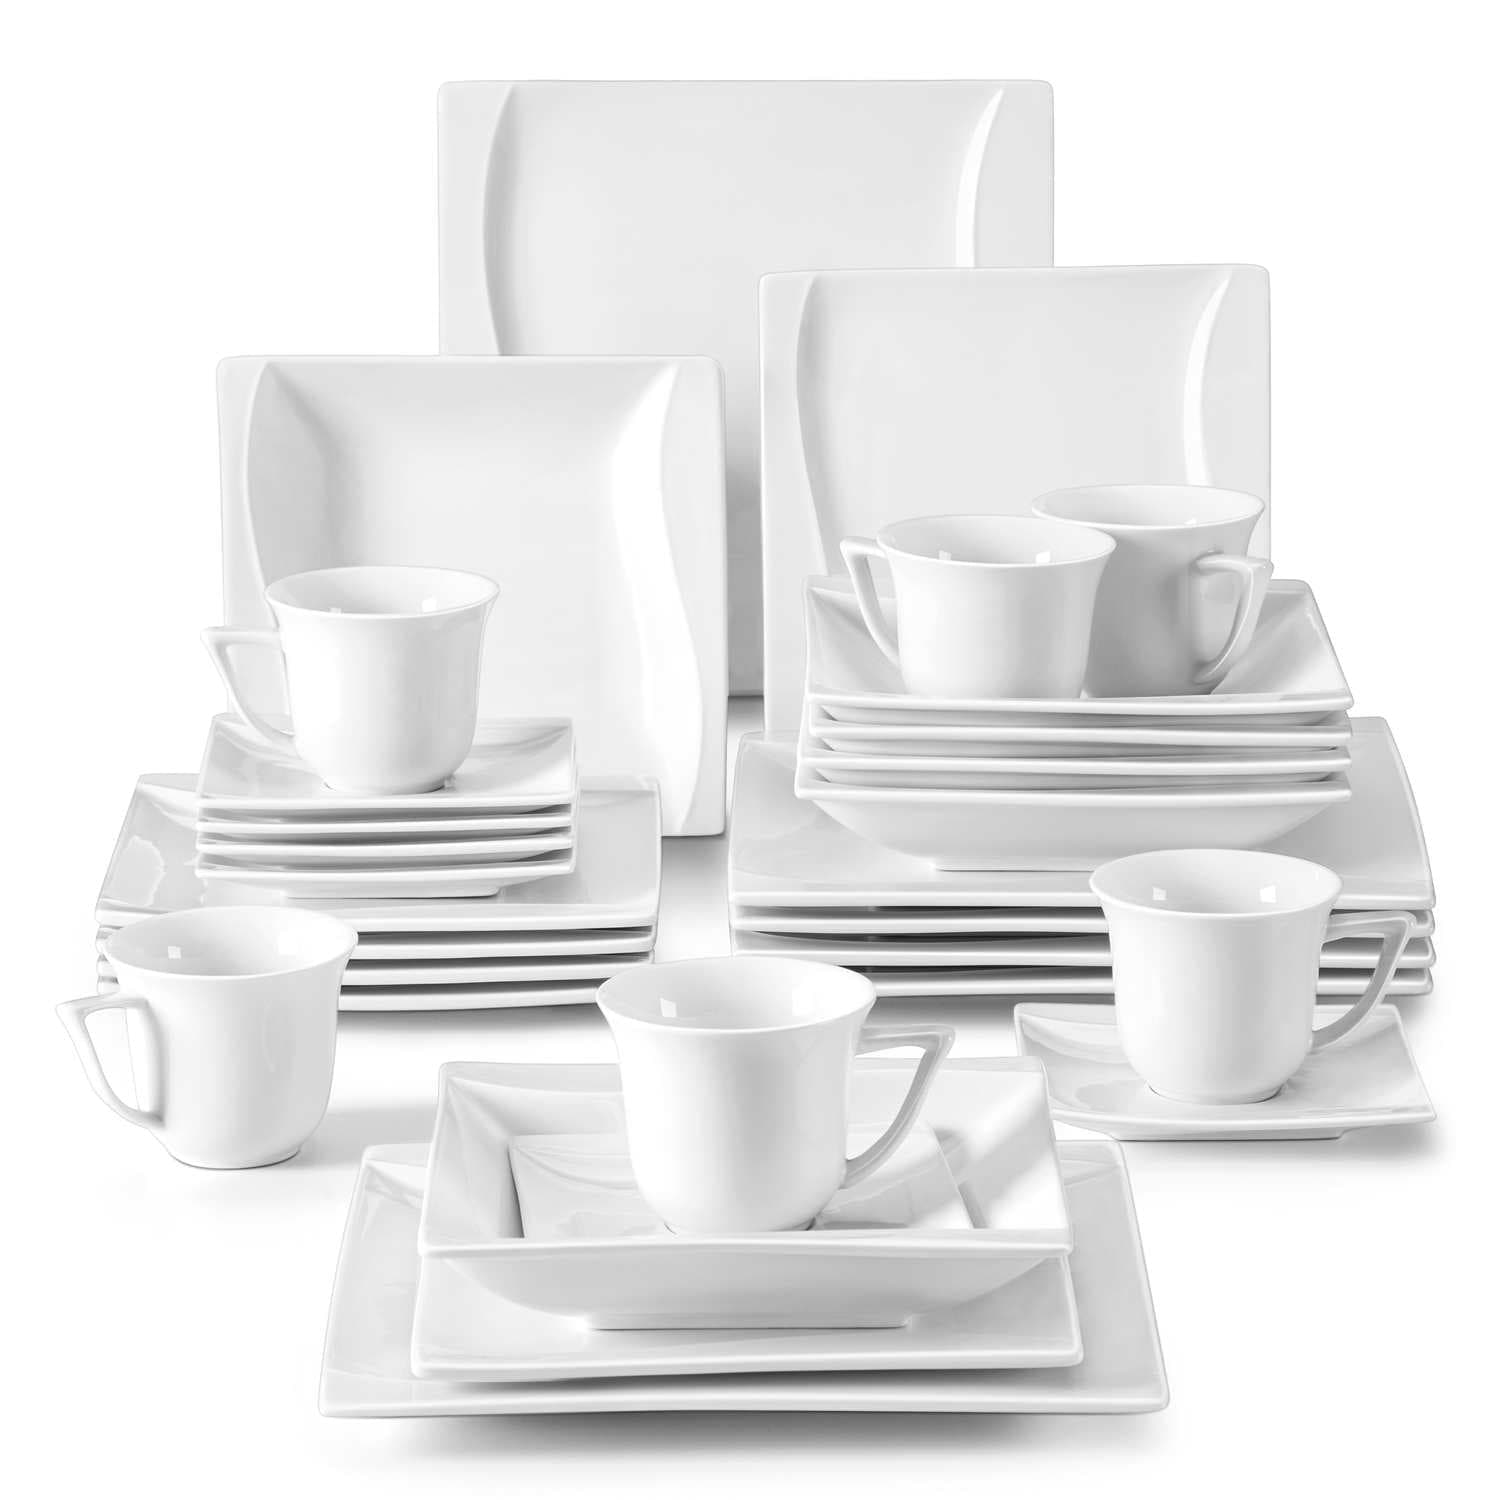 MALACASA 2-piece White Porcelain Dinnerware in the Serveware